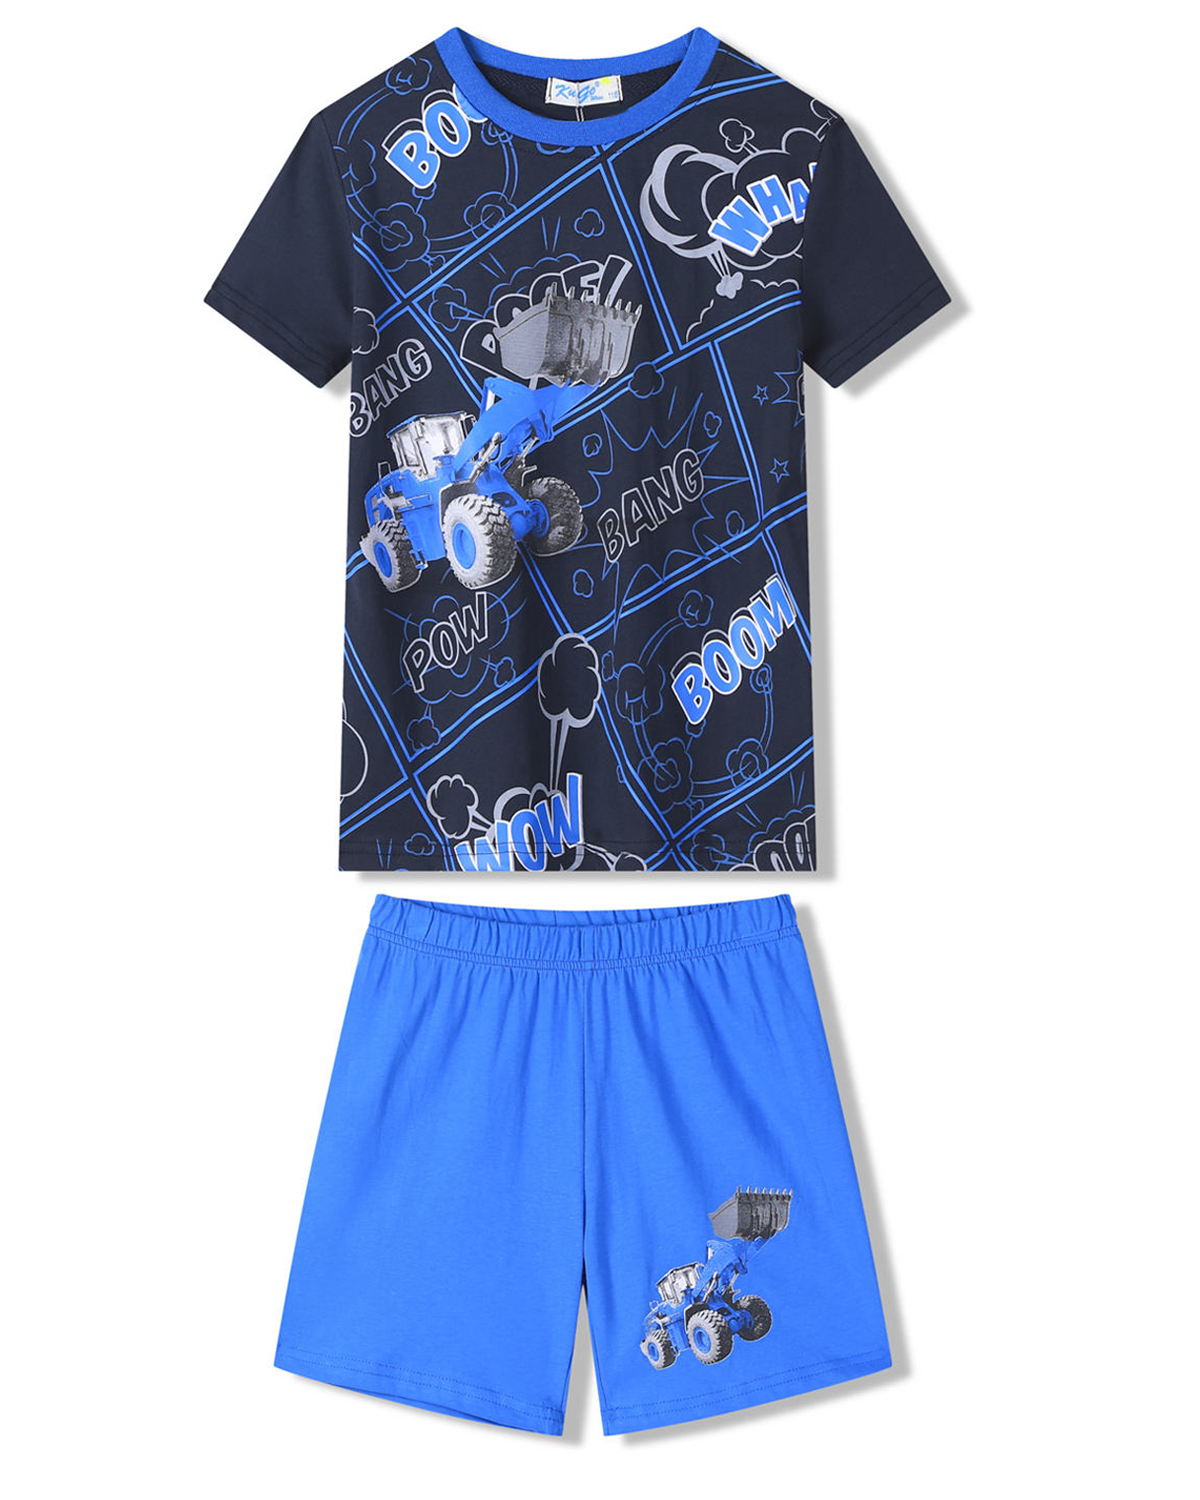 Chlapecké pyžamo - KUGO WT7310, tmavě modrá Barva: Modrá tmavě, Velikost: 104